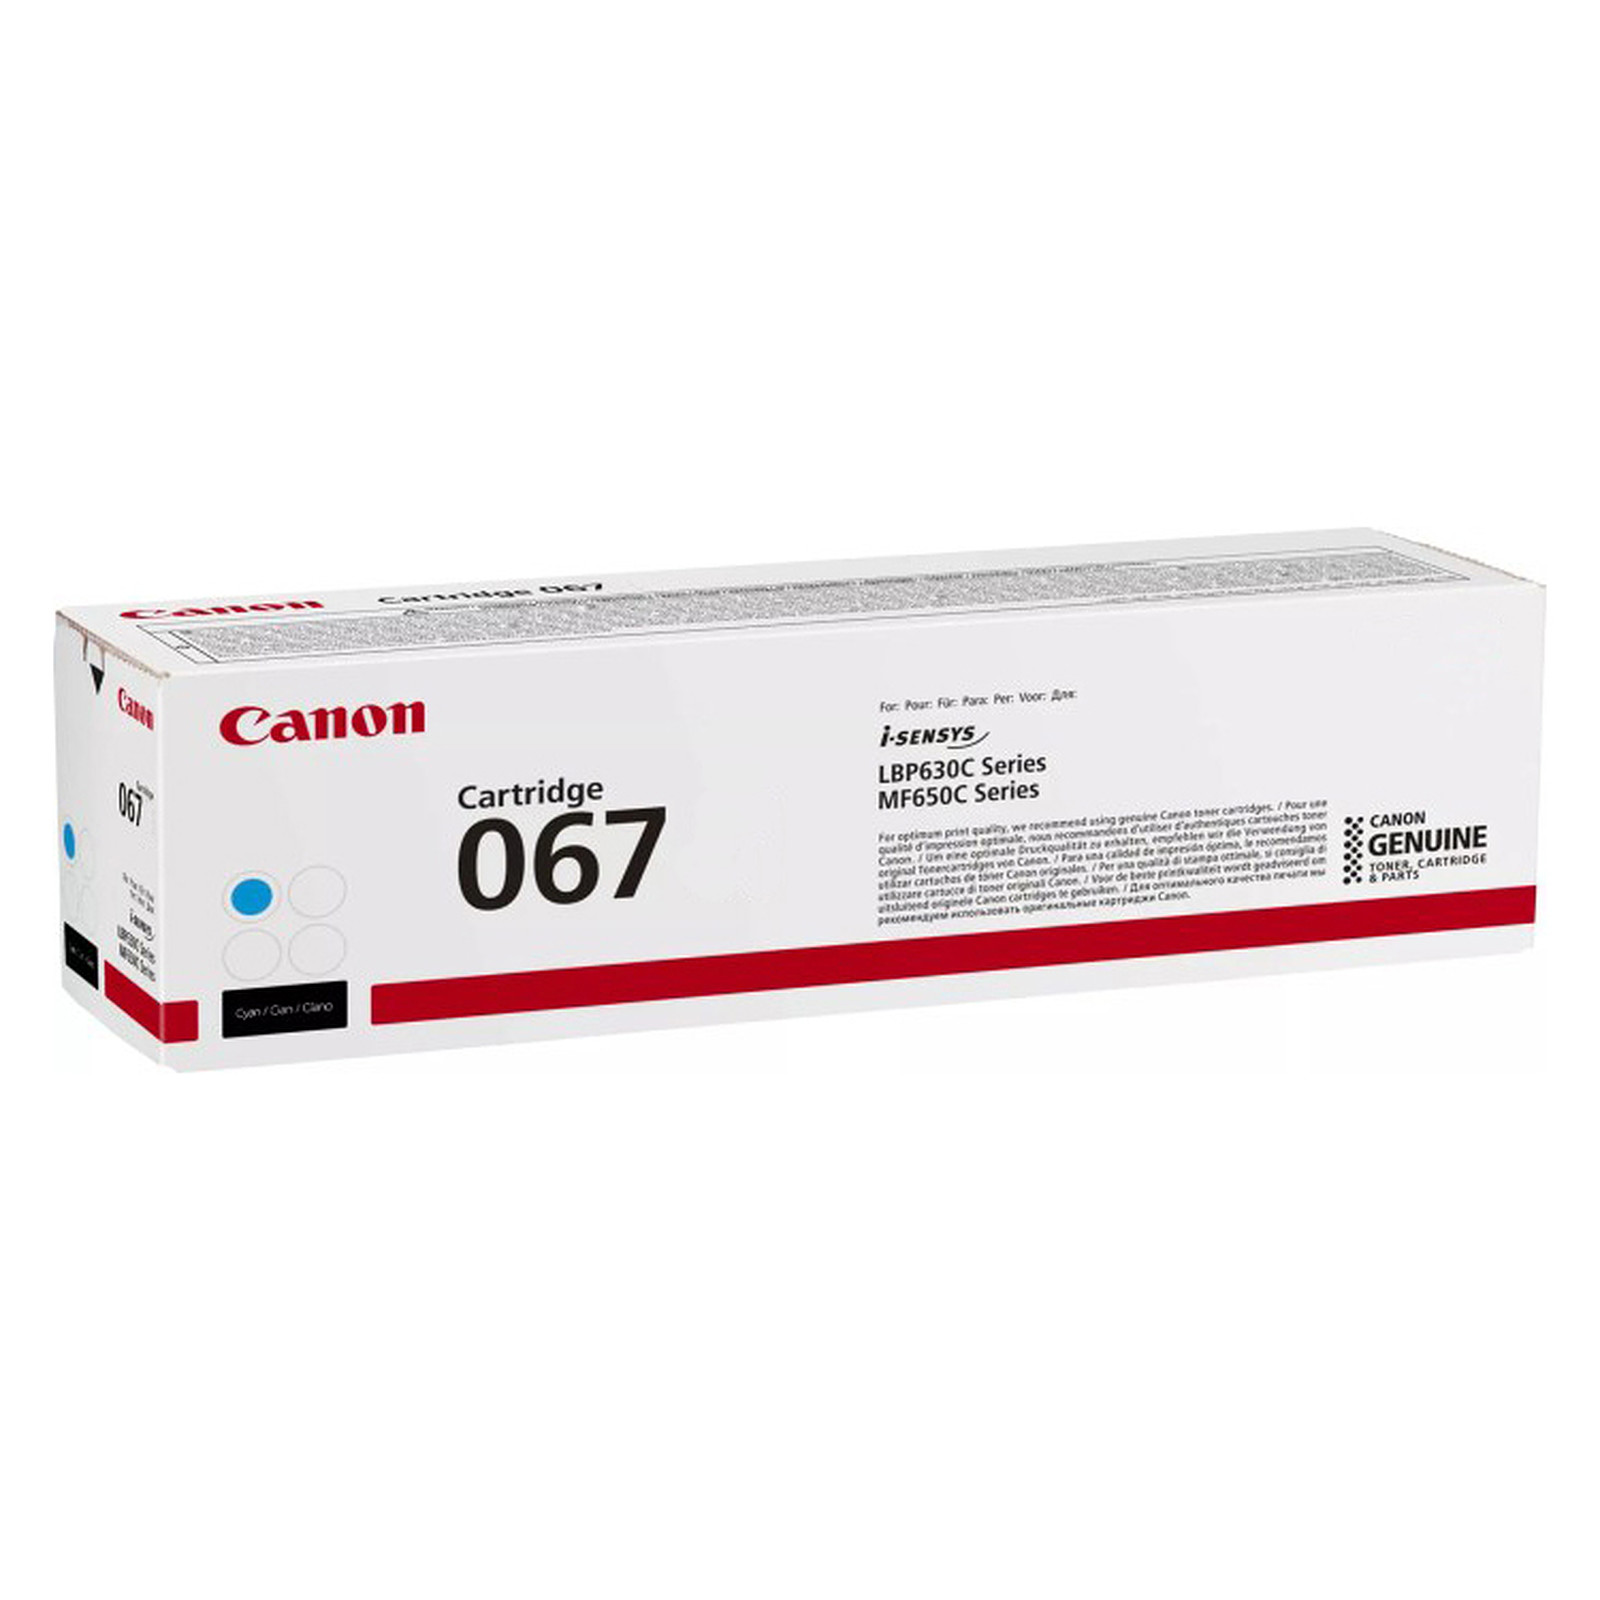 Canon-067-Cyan-Toner-Cartridge.jpg